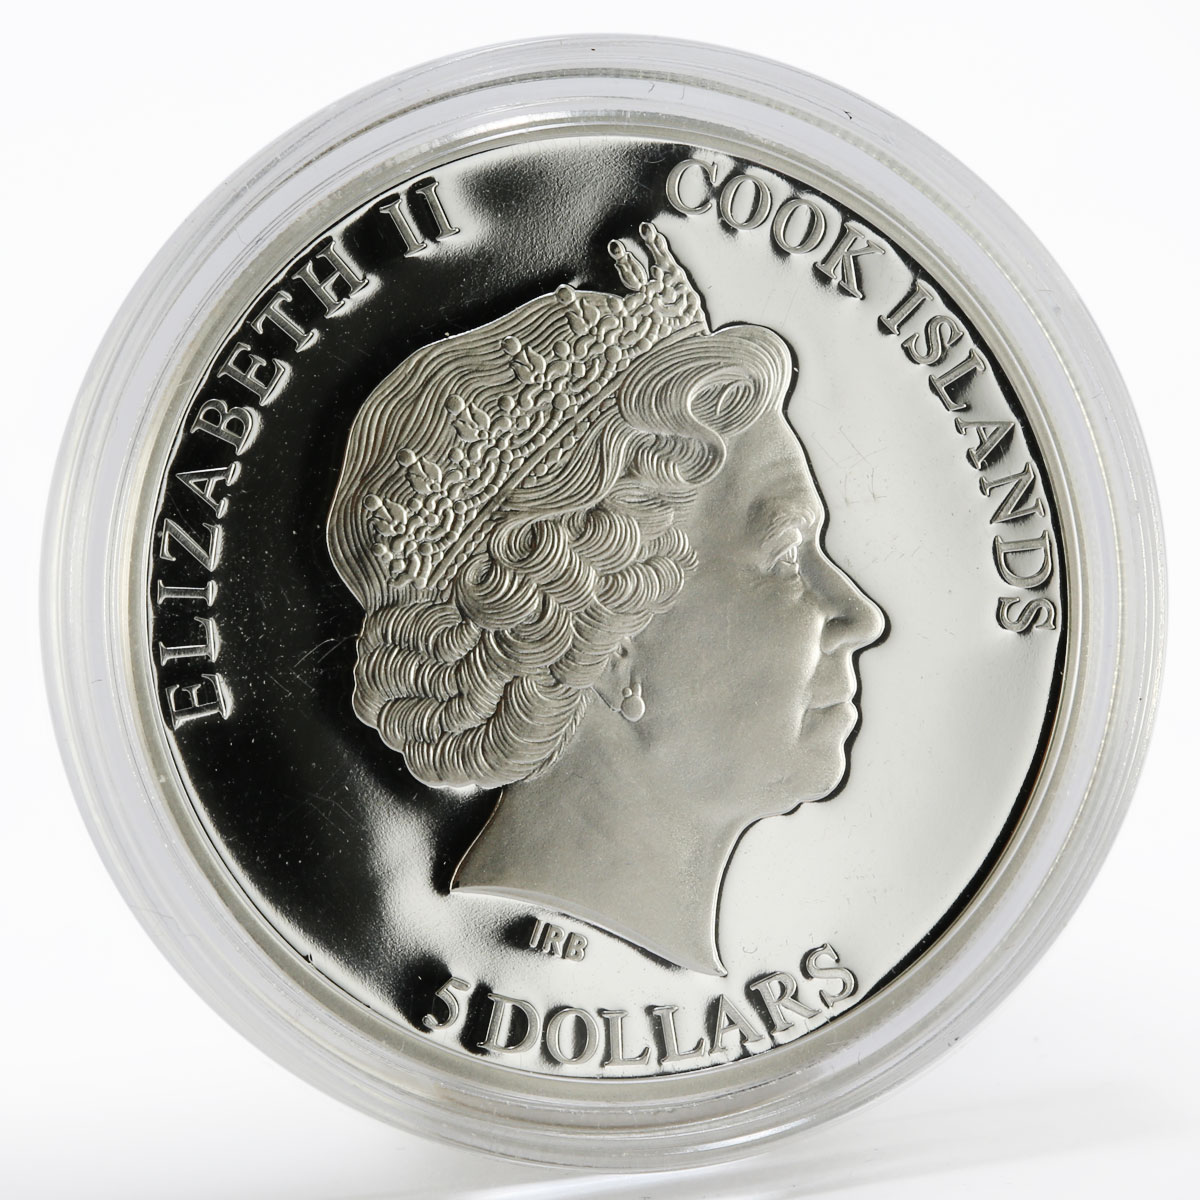 Cook Islands 5 dollar Chelyabinsk Meteorite proof silver coin 2013